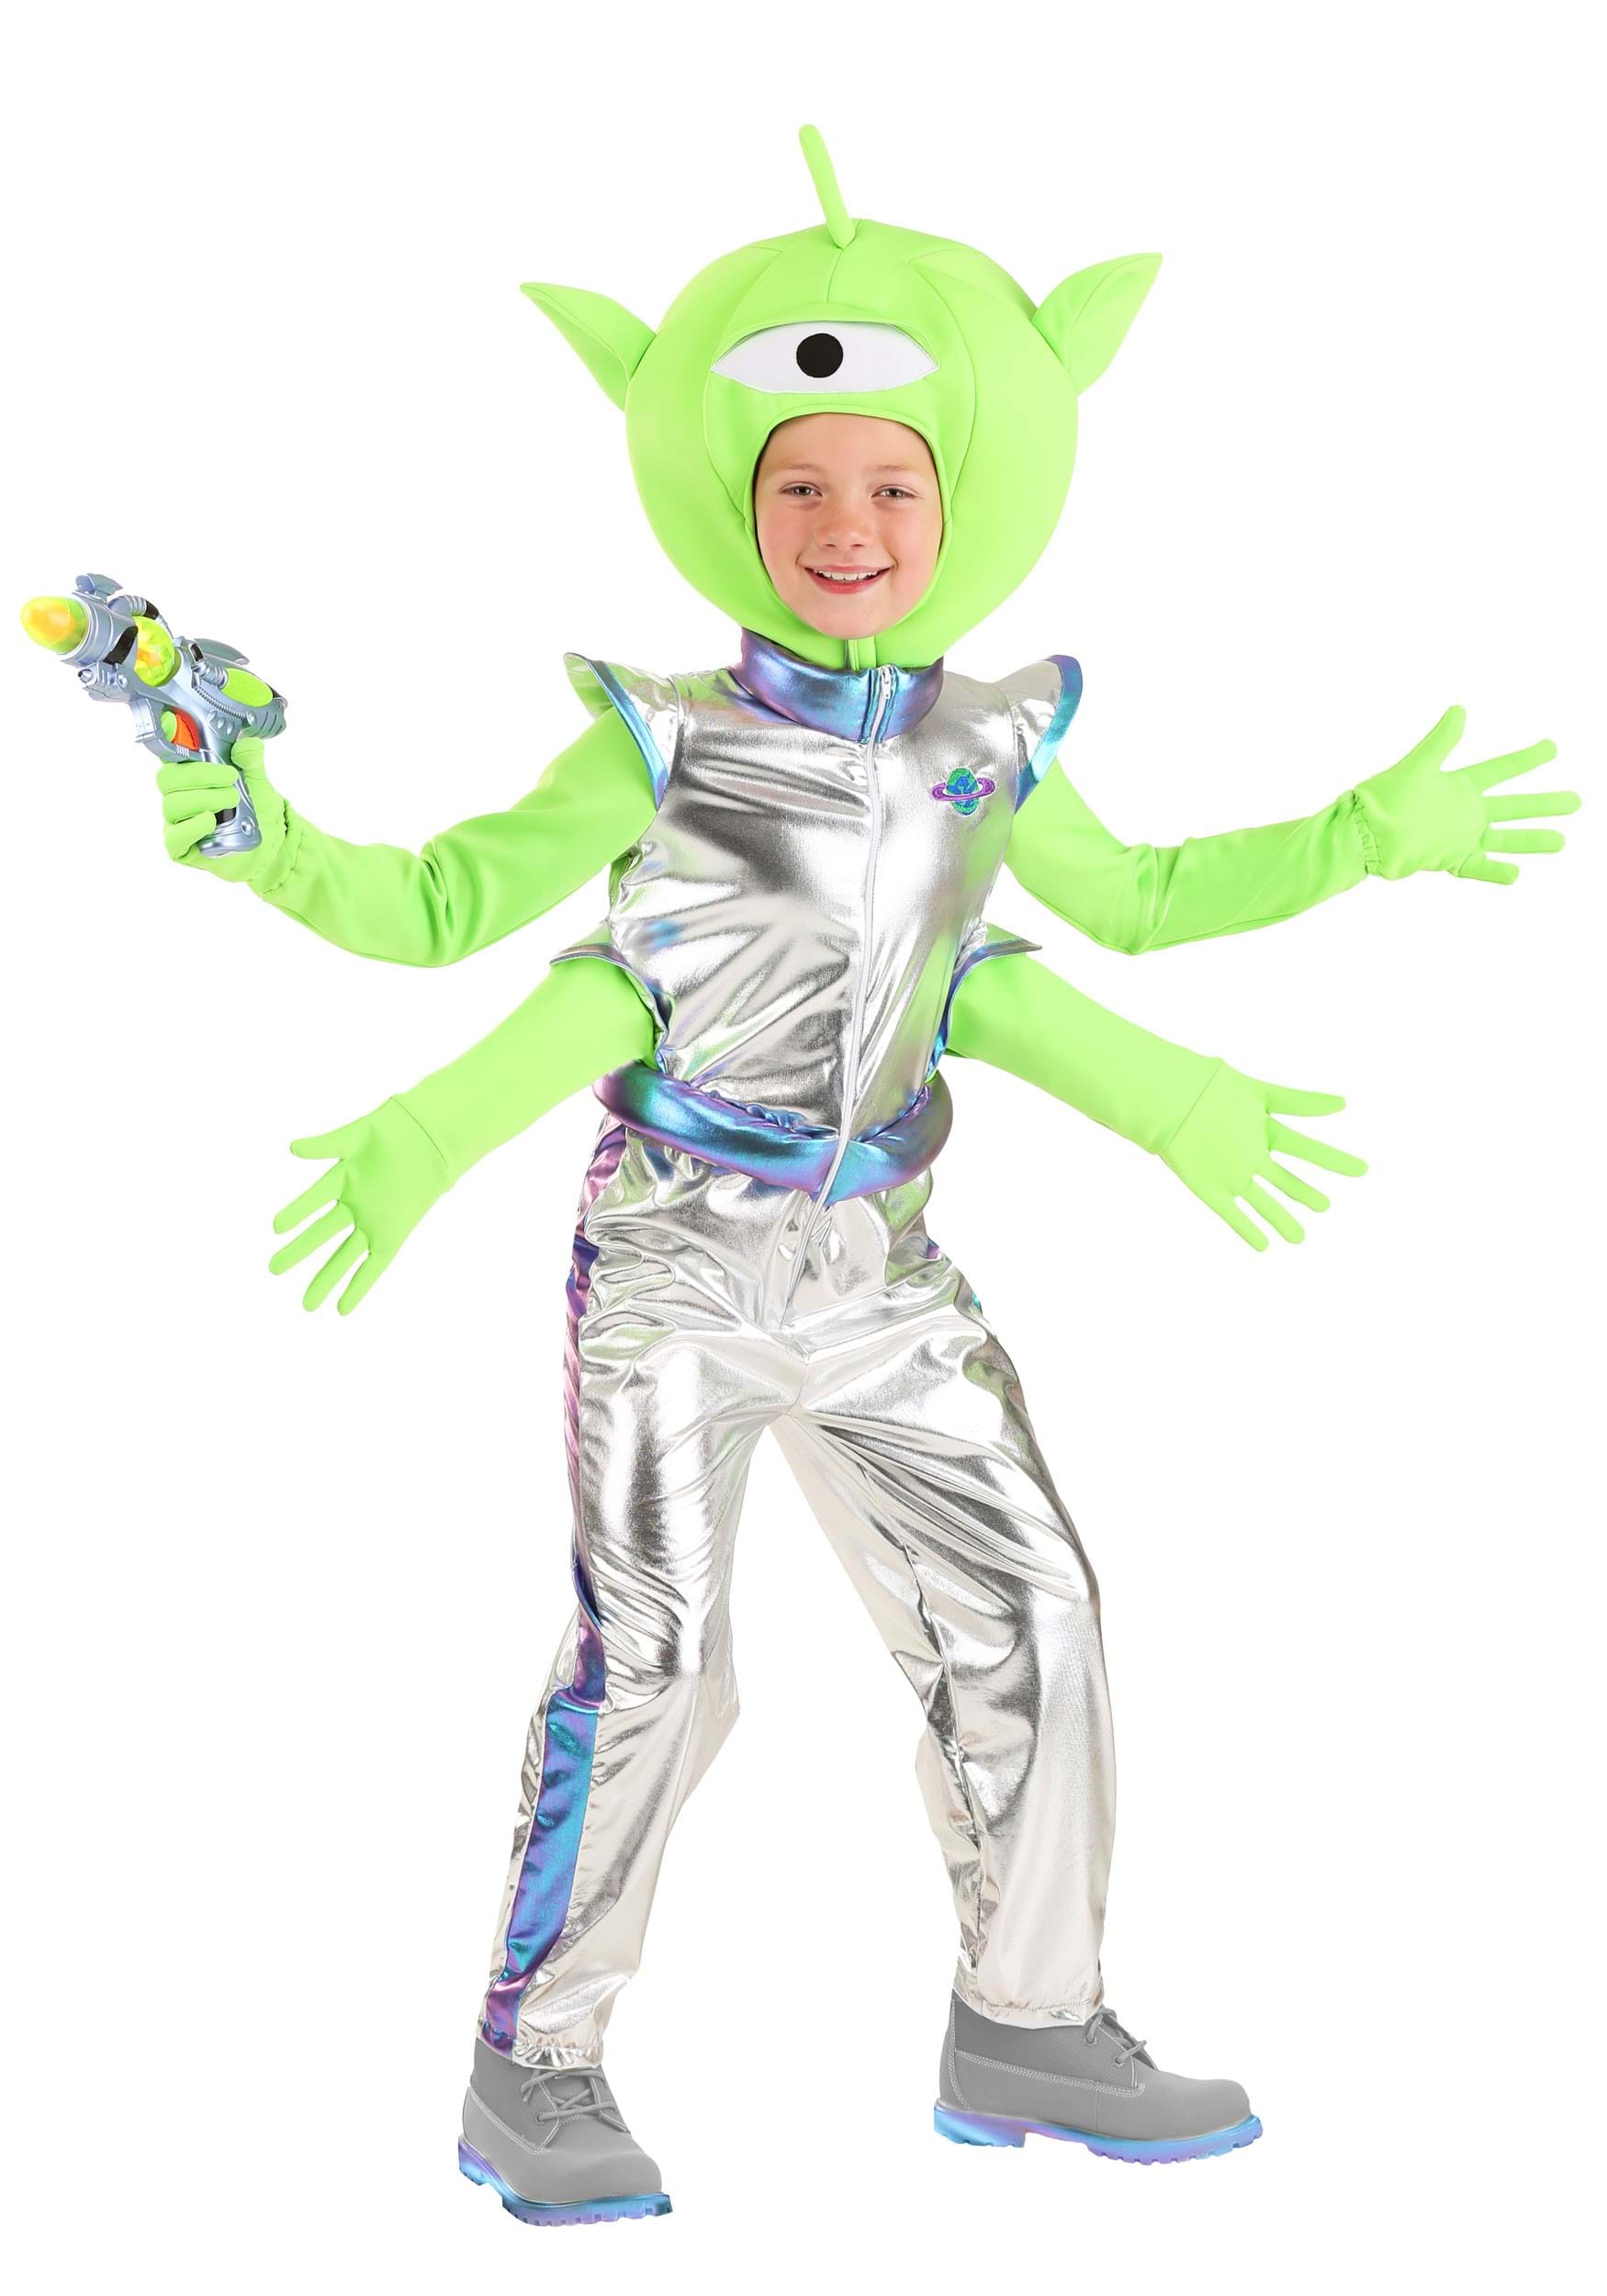 https://images.halloweencostumes.com/products/63735/1-1/kids-friendly-alien-costume.jpg